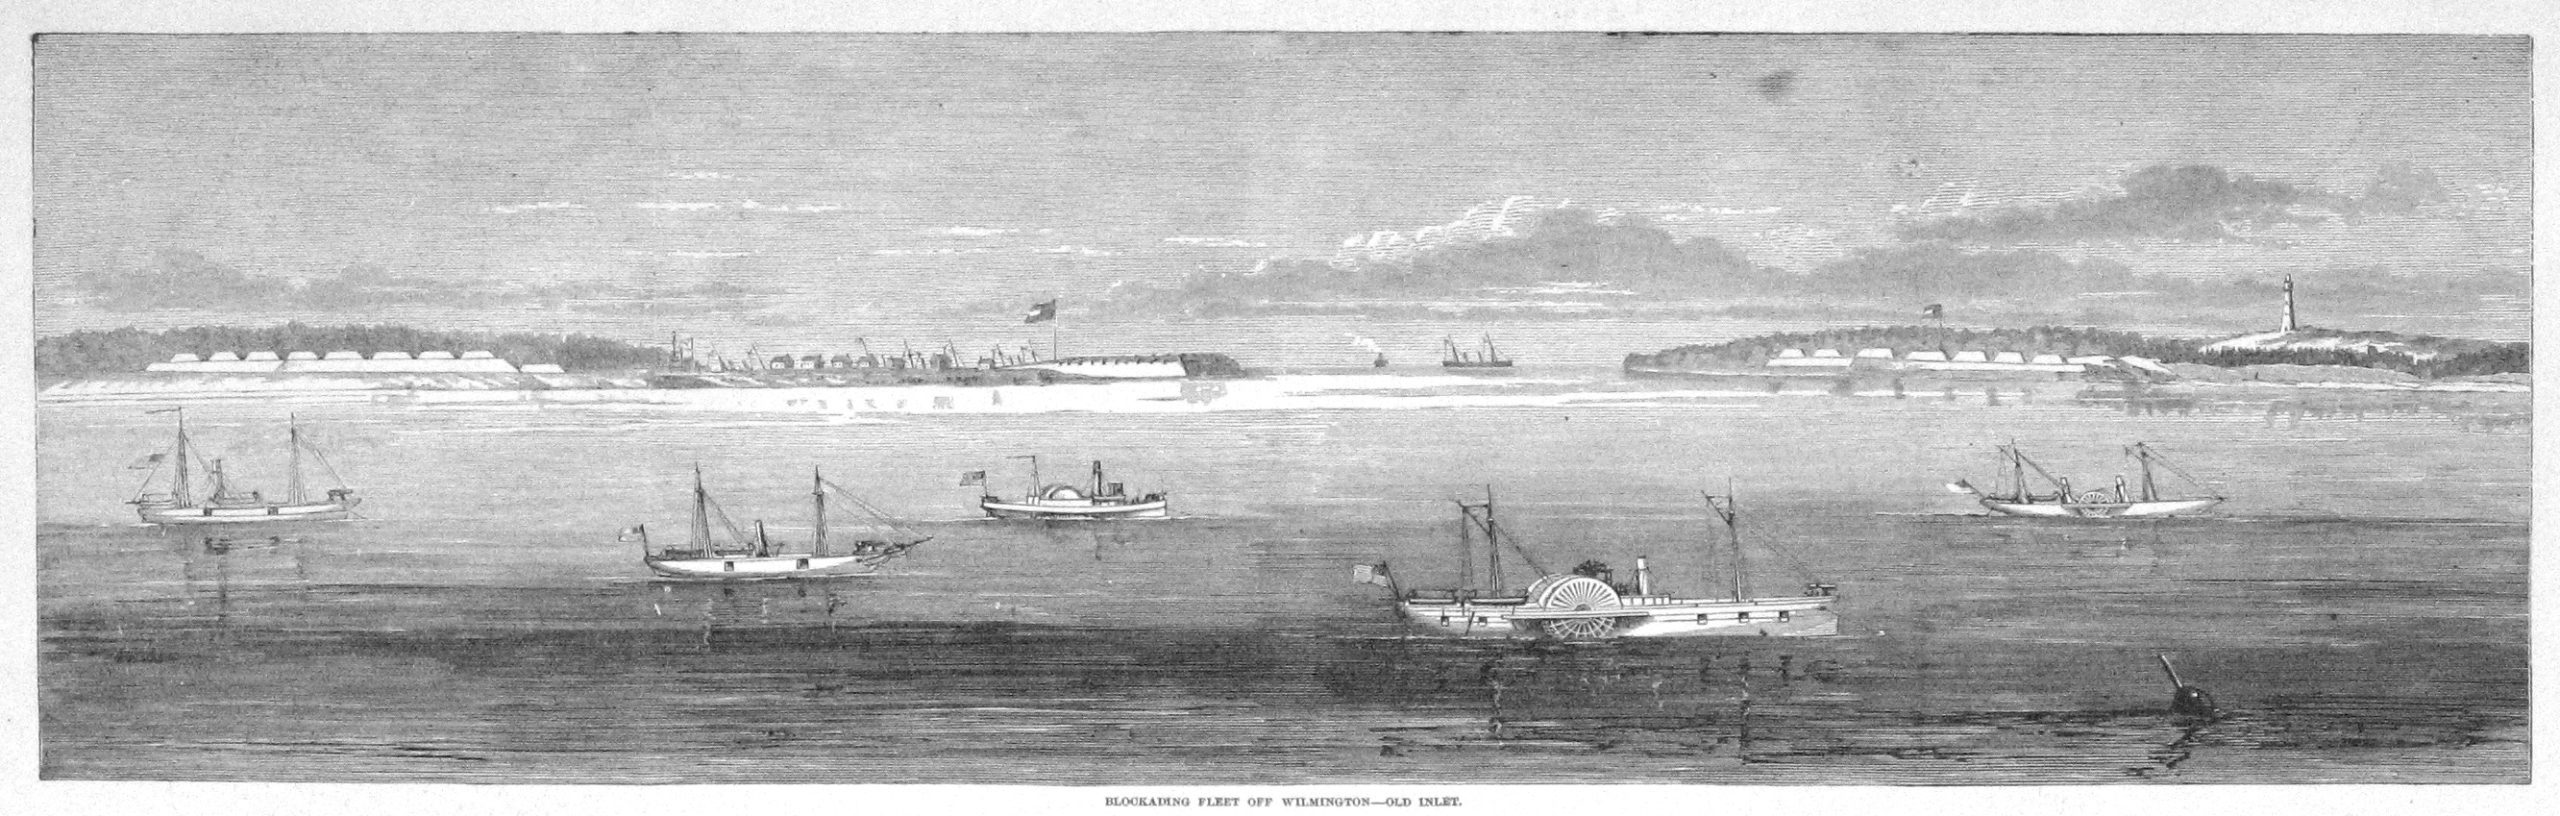 wilmington blockade fleet scaled